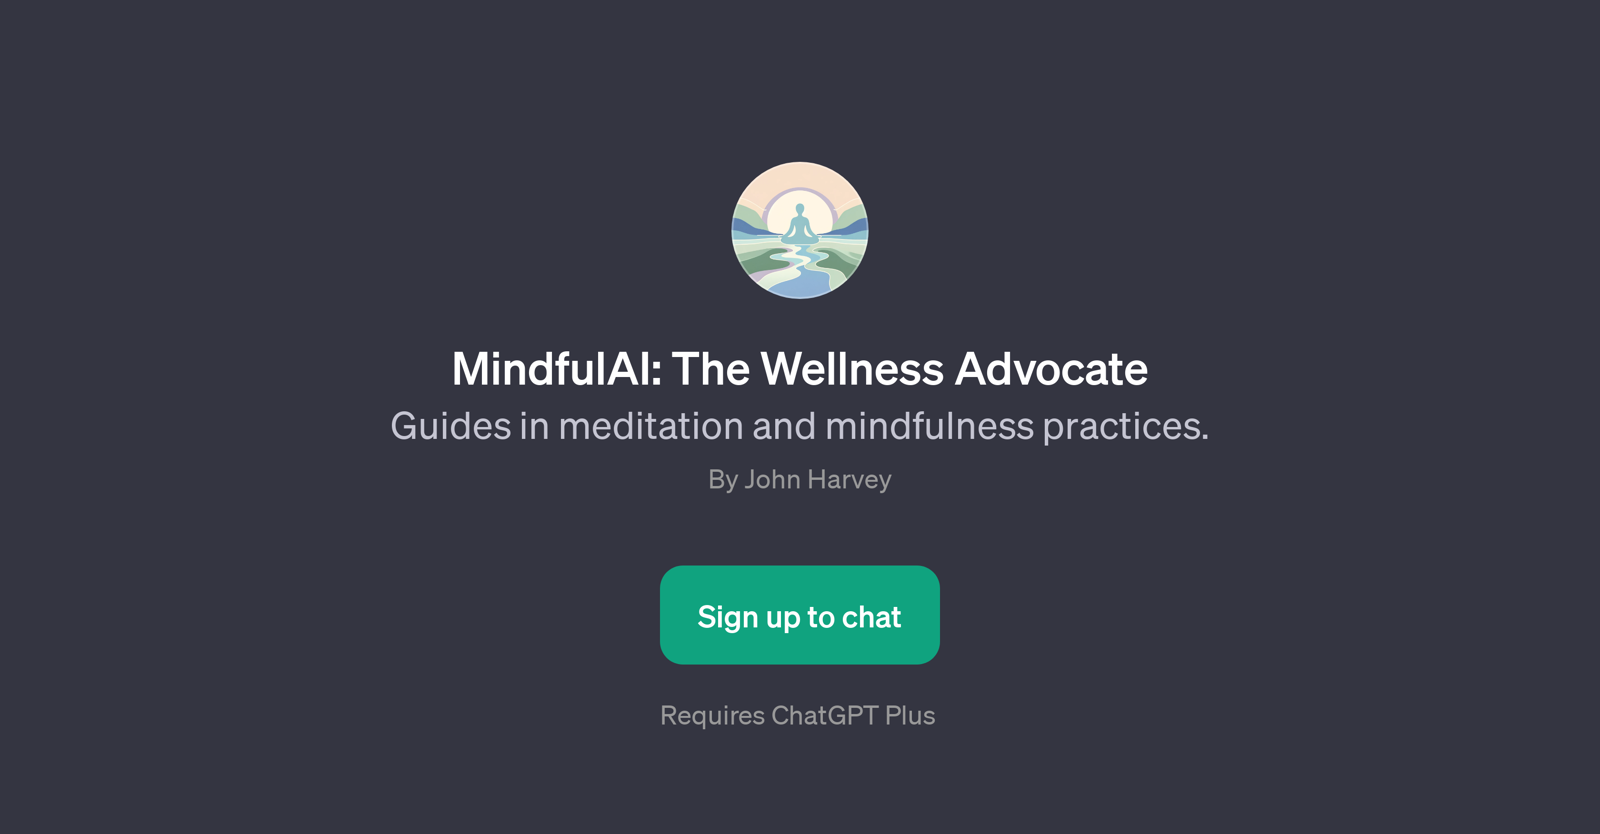 MindfulAI: The Wellness Advocate website